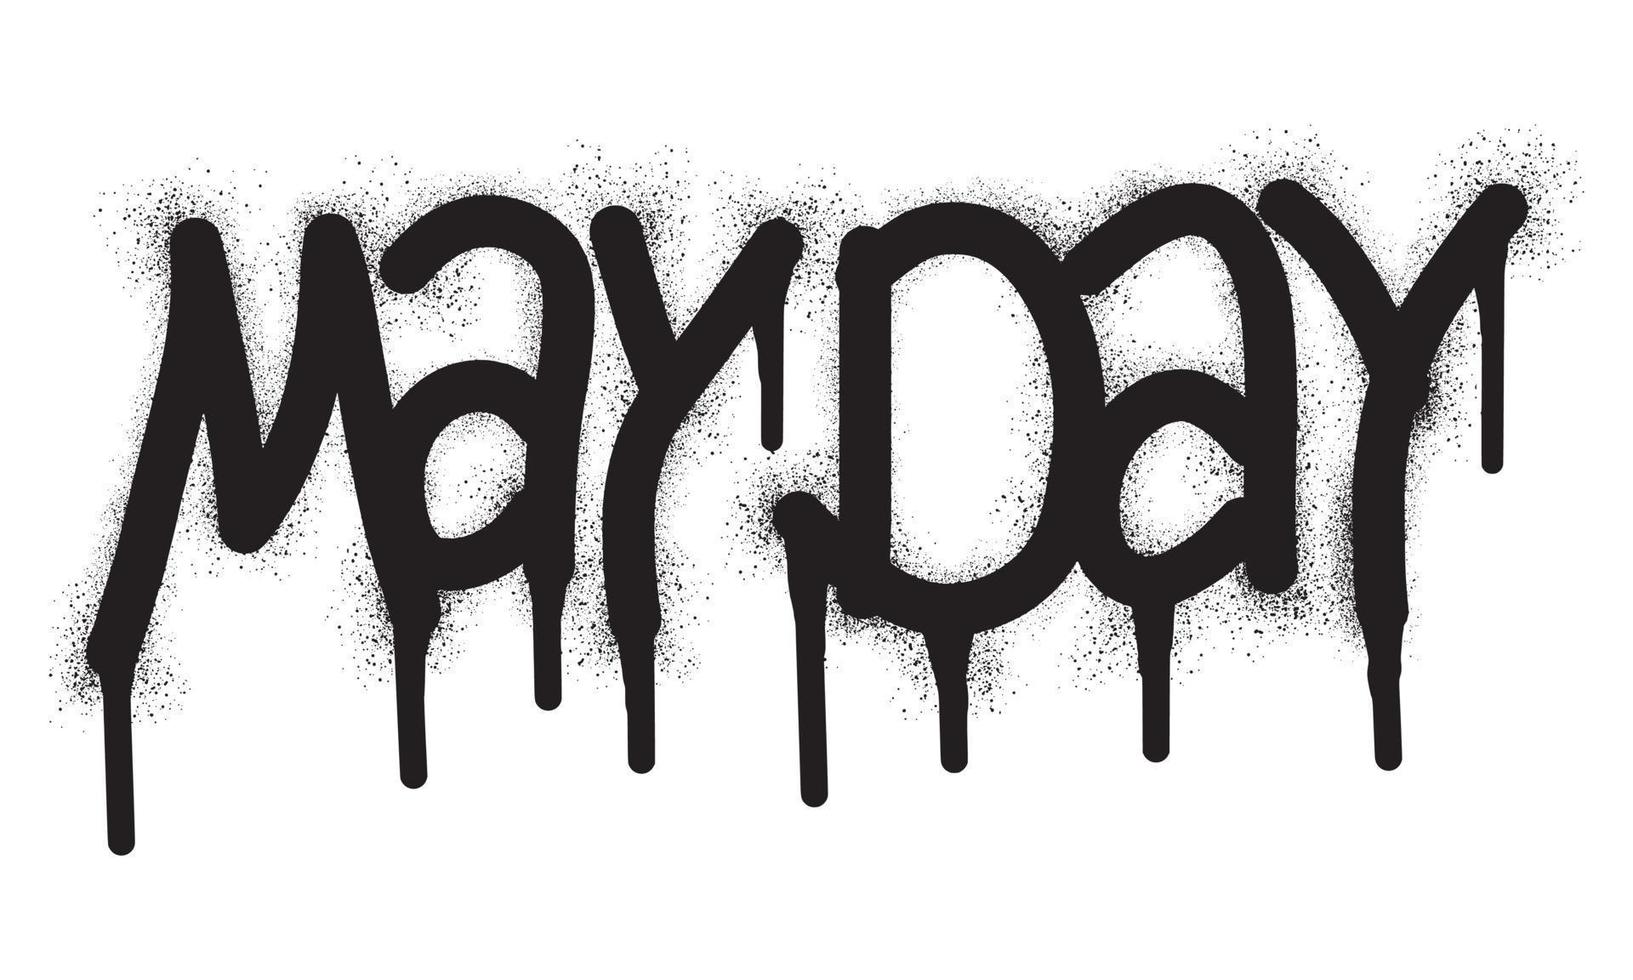 graffiti Mayday tekst met zwart verstuiven verf vector